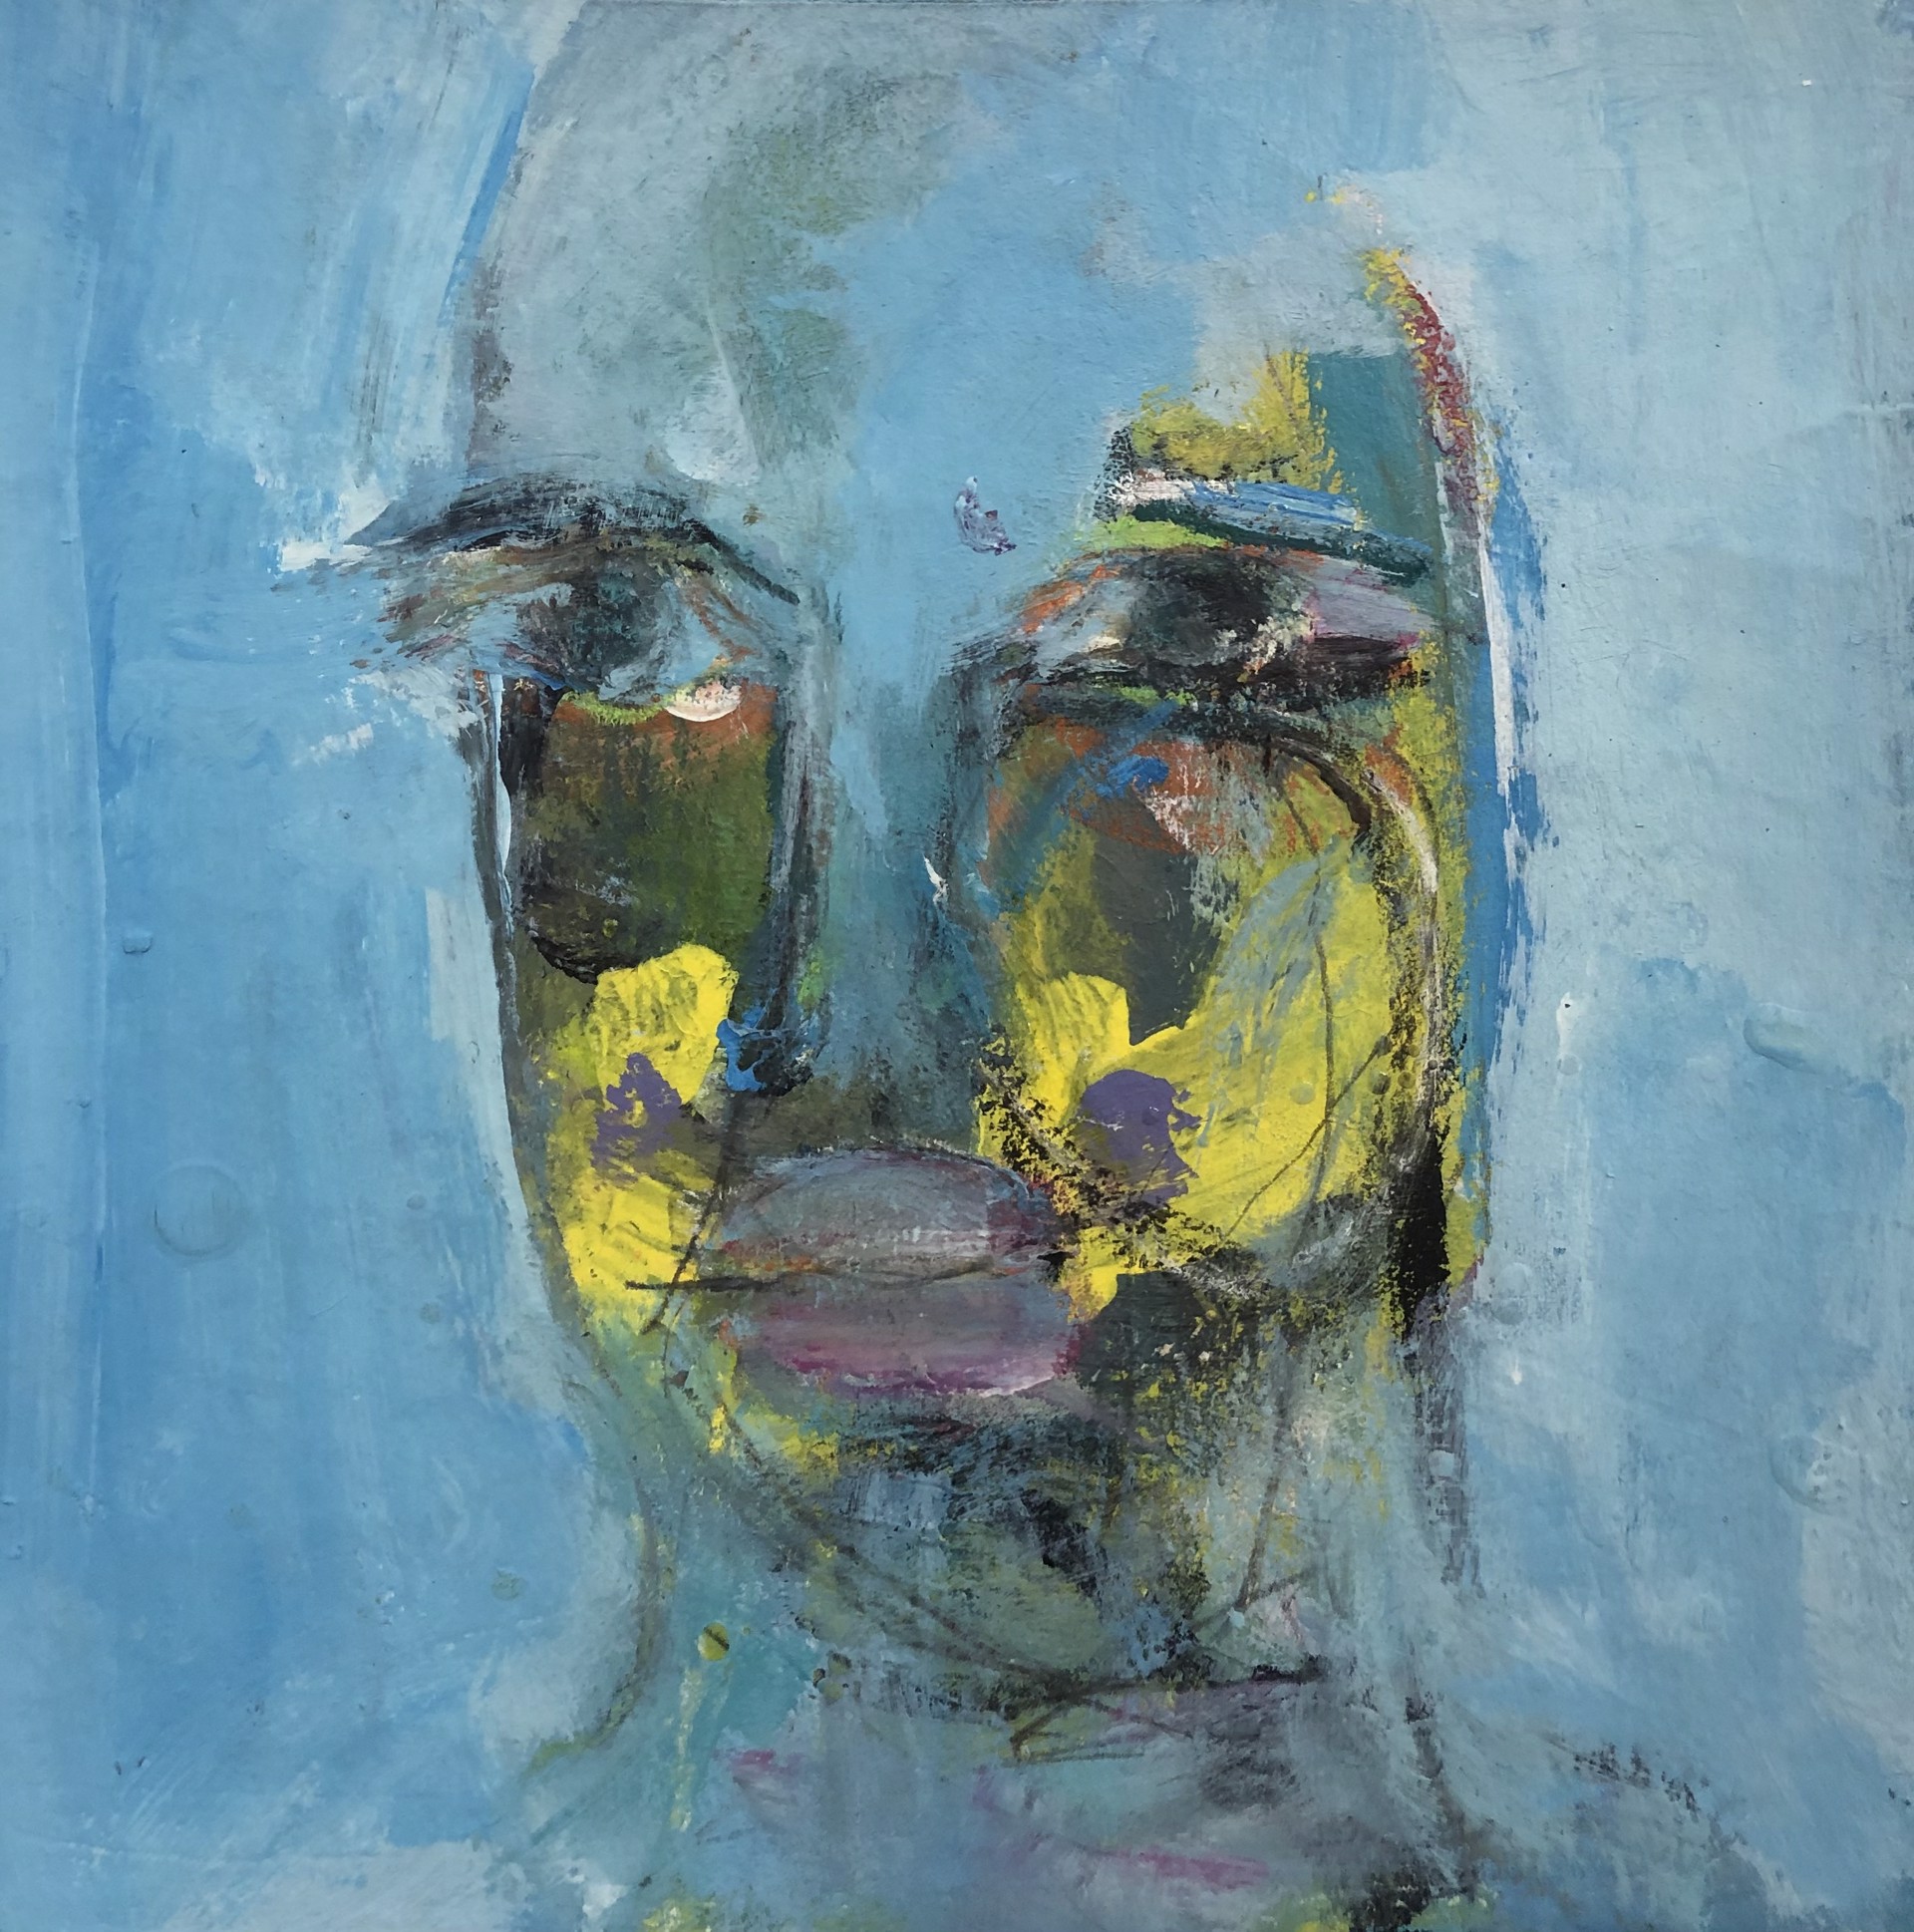 Face (529) by Catie Radney